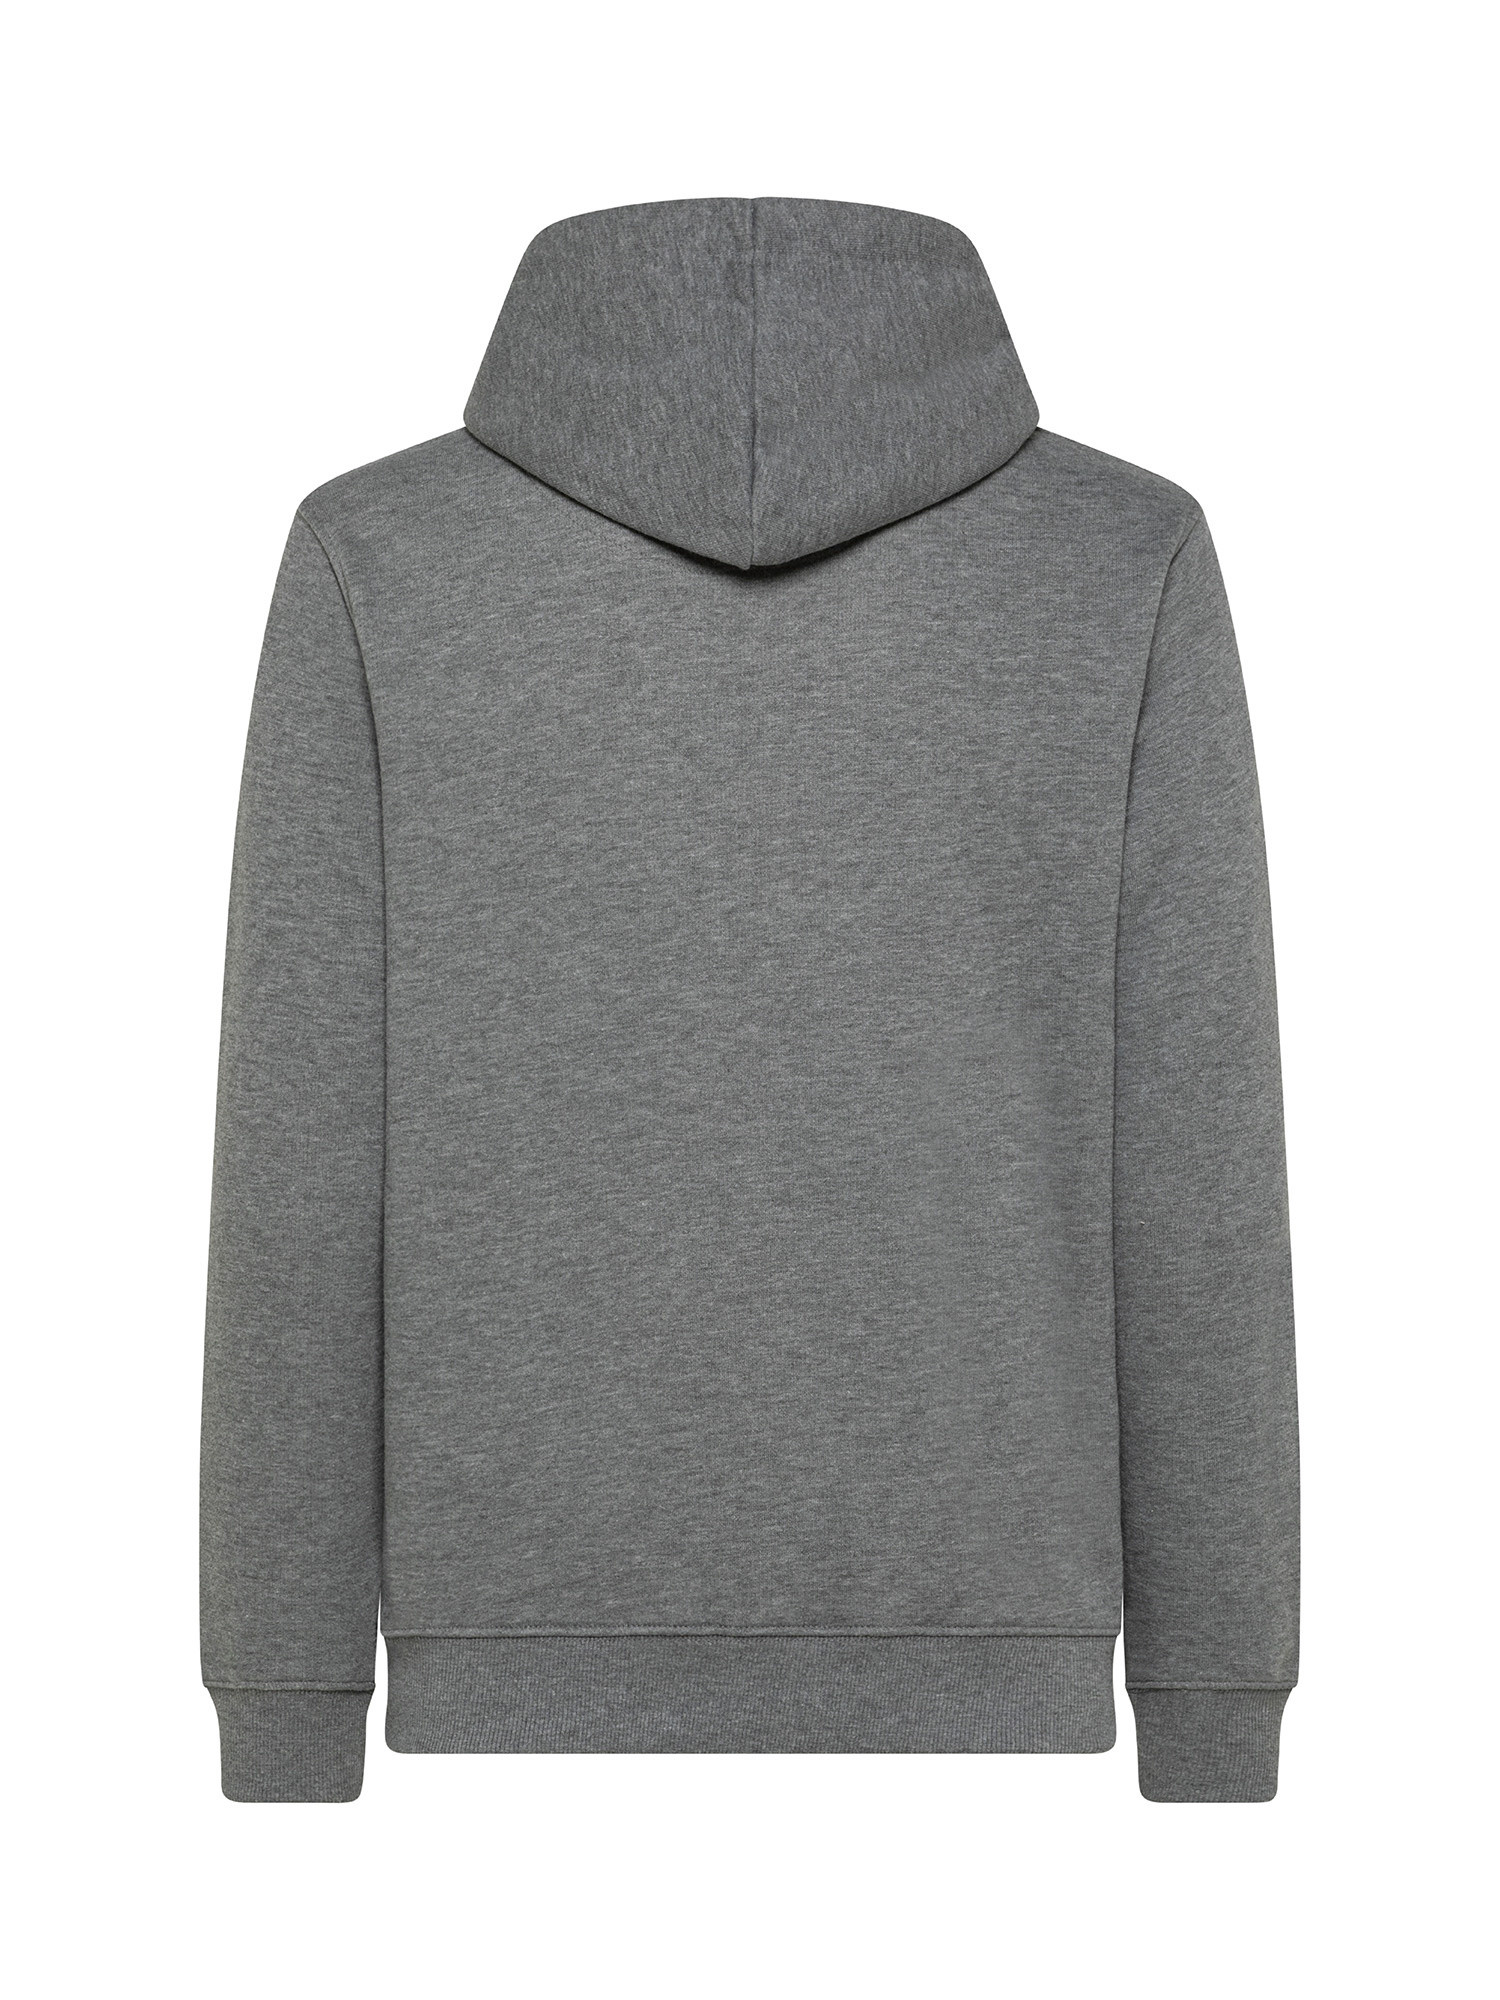 Hooded sweatshirt with logo, Dark Grey, large image number 1